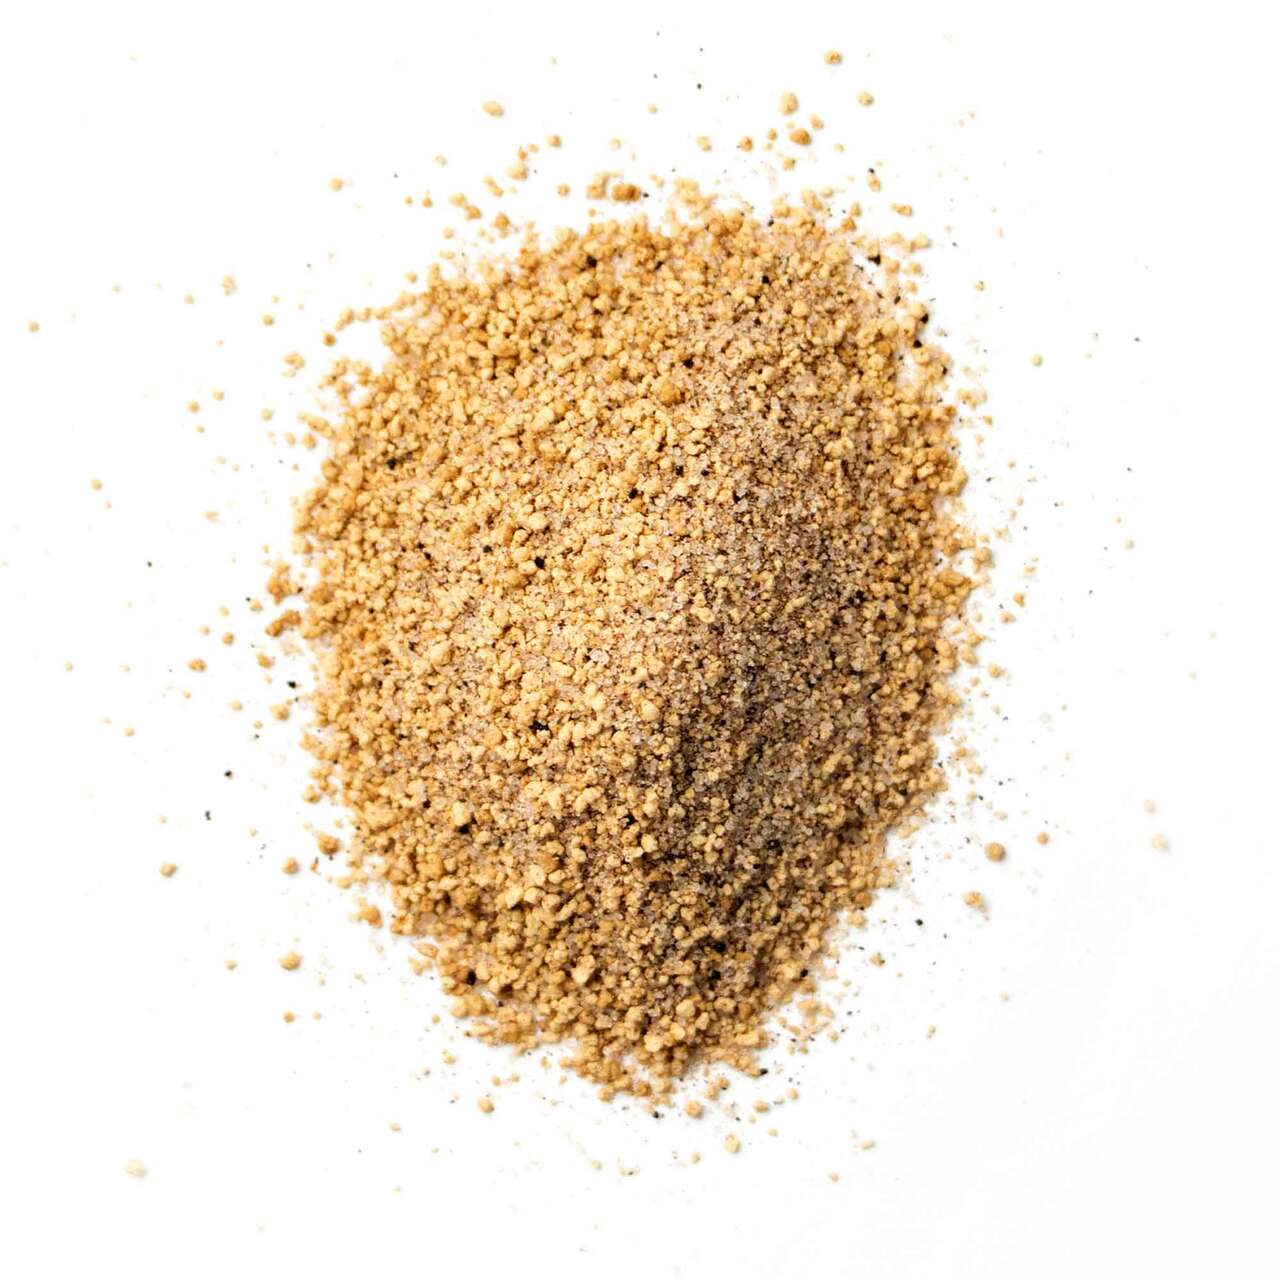 Spiceology Unsalted Caramel Salt-Free Seasoning